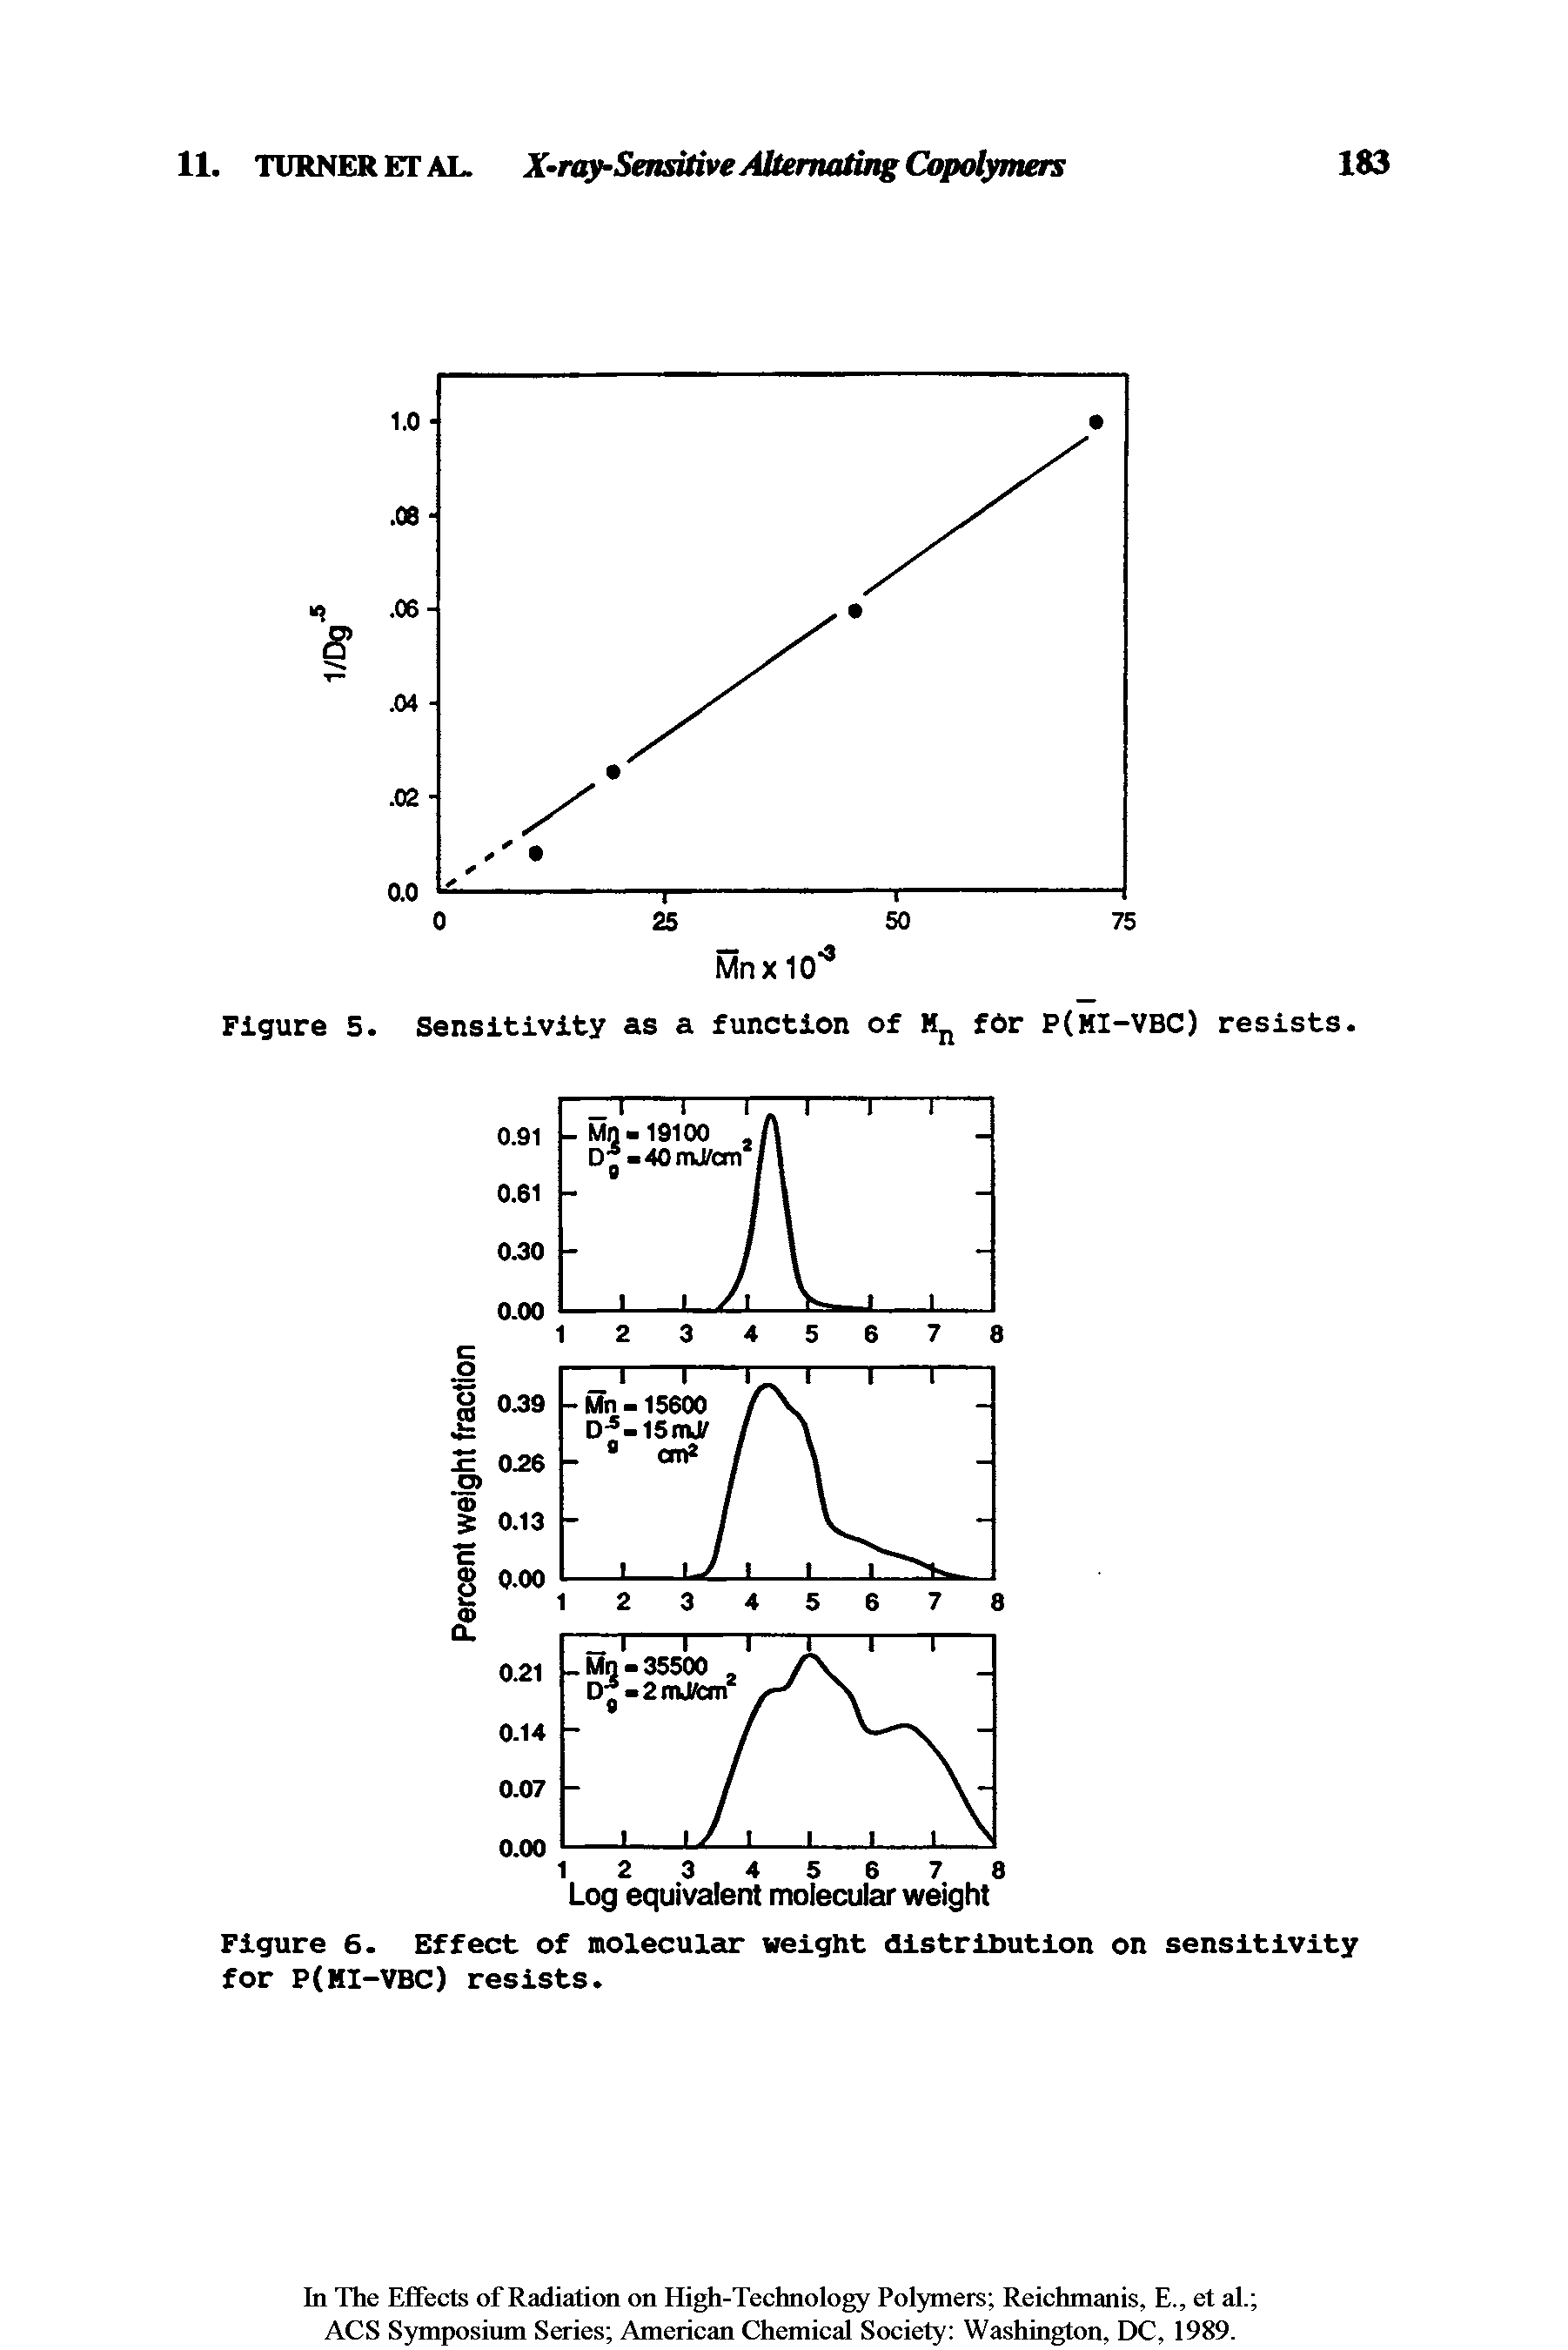 Figure 6. Effect of molecular weight distribution on sensitivity for P(HI-VBC) resists.